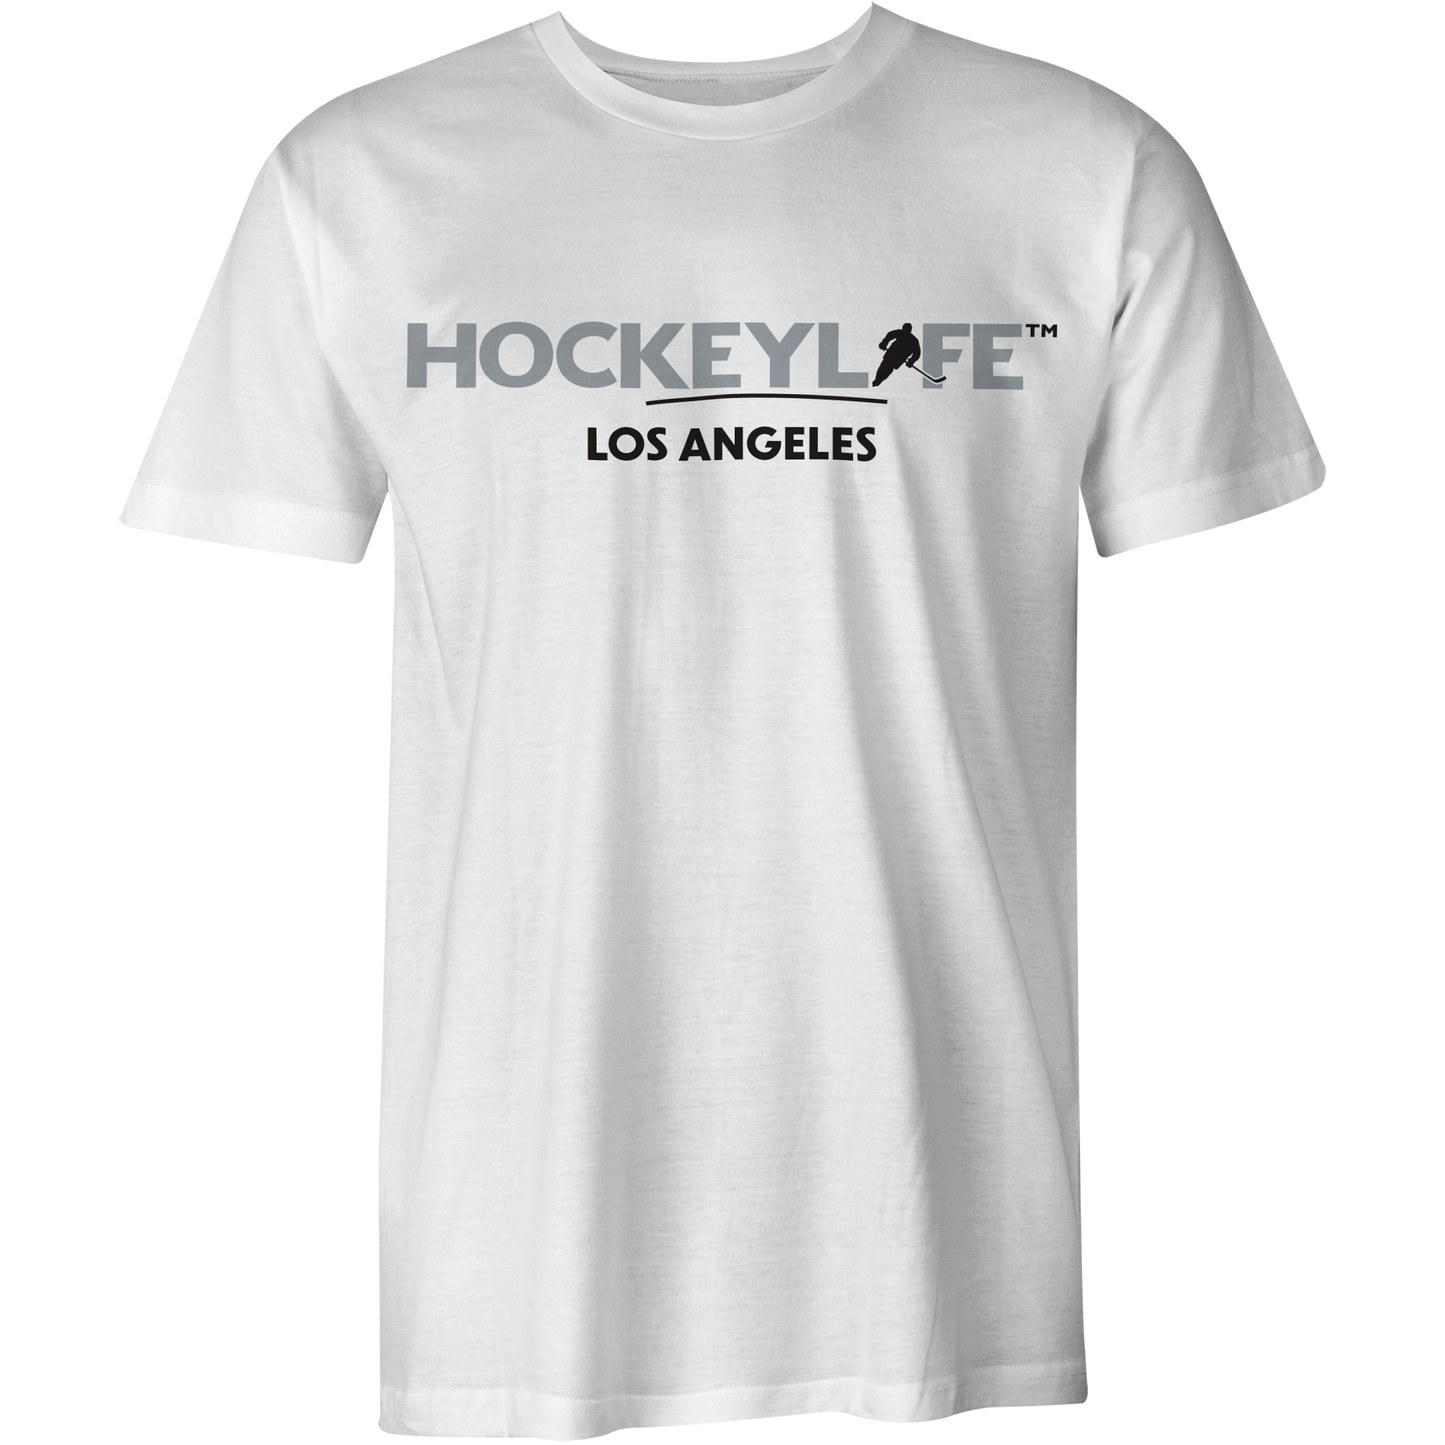 HockeyLife Los Angeles Tee Shirt